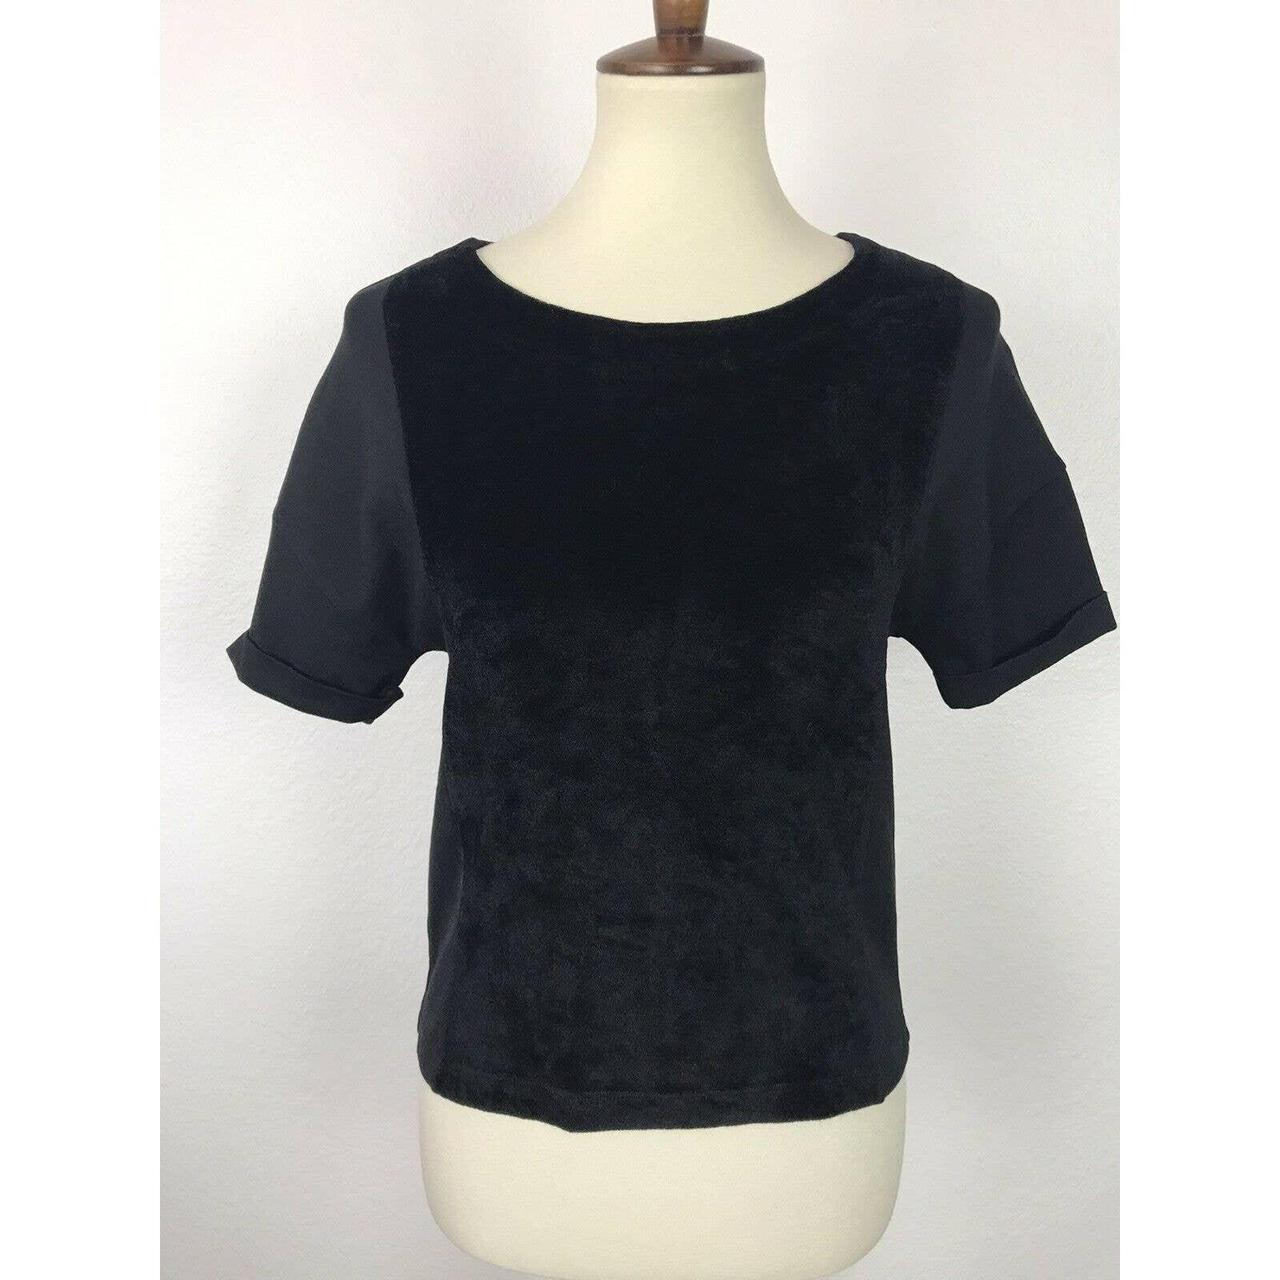 Product Image 1 - Karen Millen Pullover Knit Top

Black

Back Zip

Size